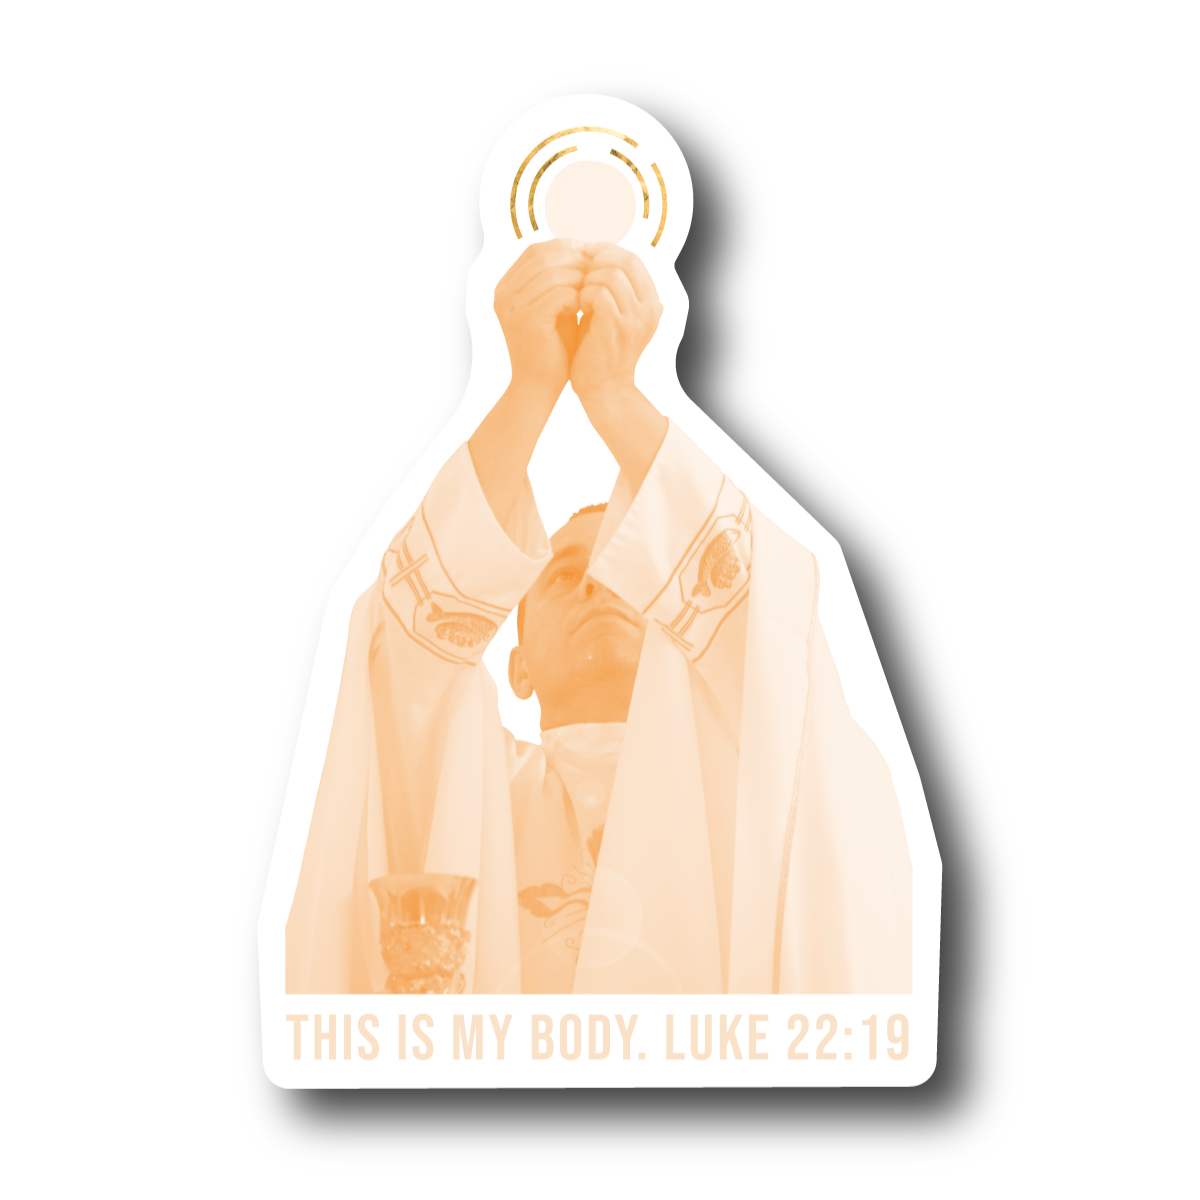 This is My Body, Priest - Luke 22:19 Sticker